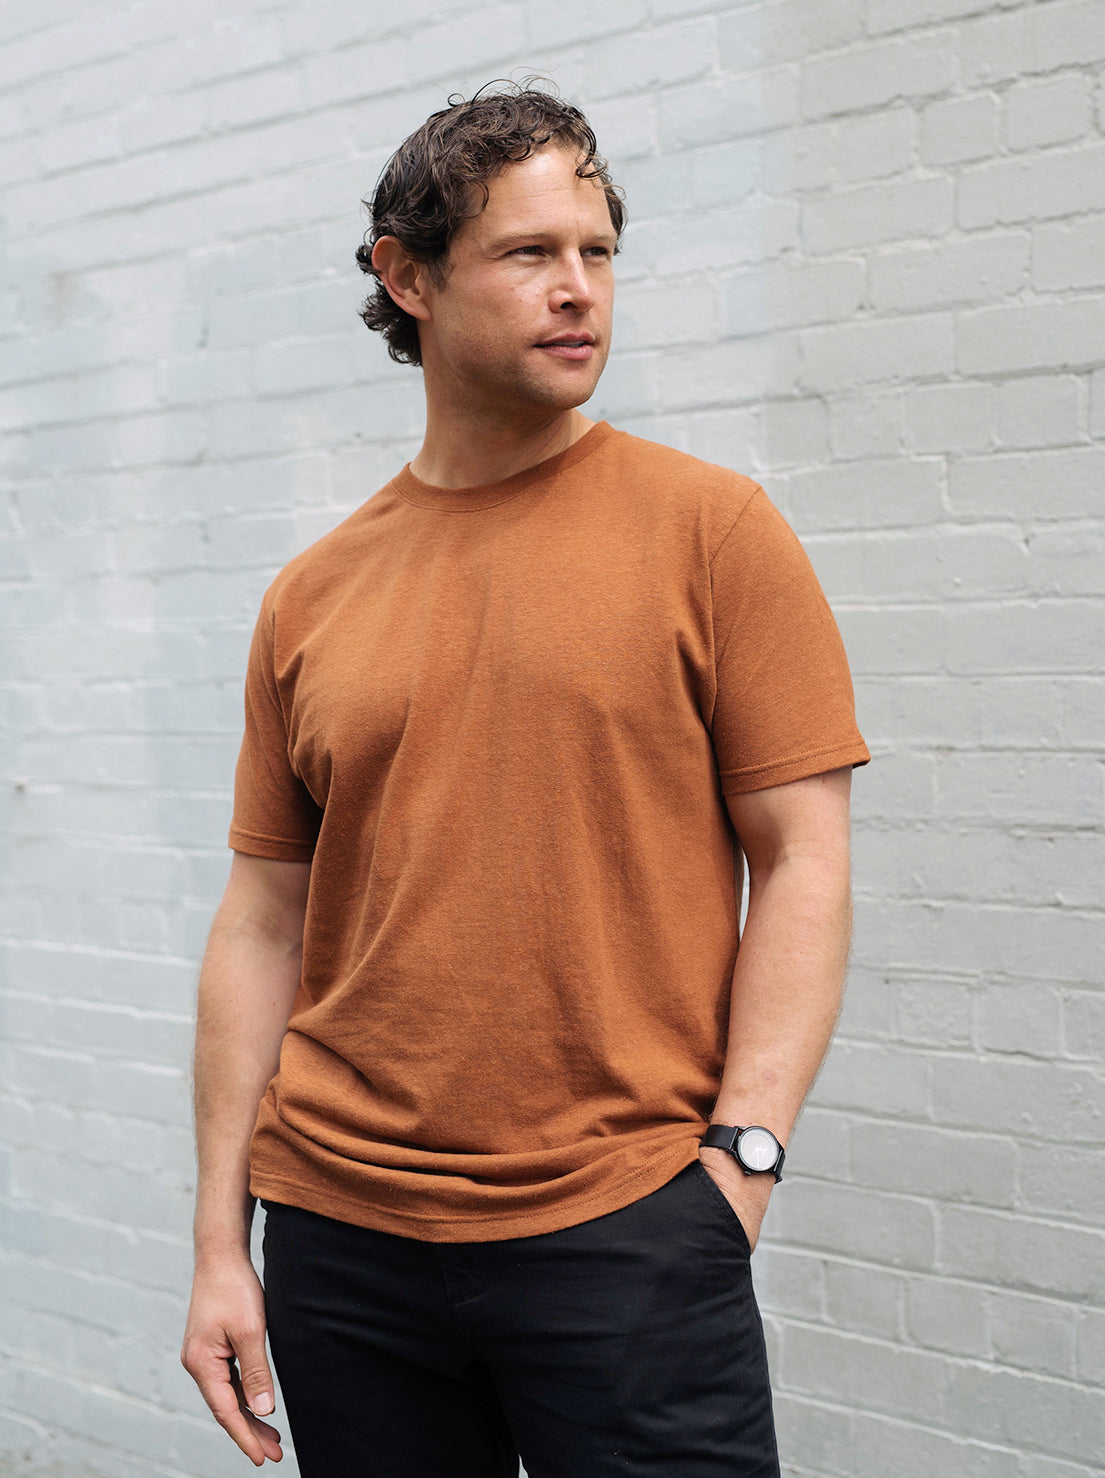 Hemp Clothing Australia - Mens Classic T-Shirt - Cinnamon